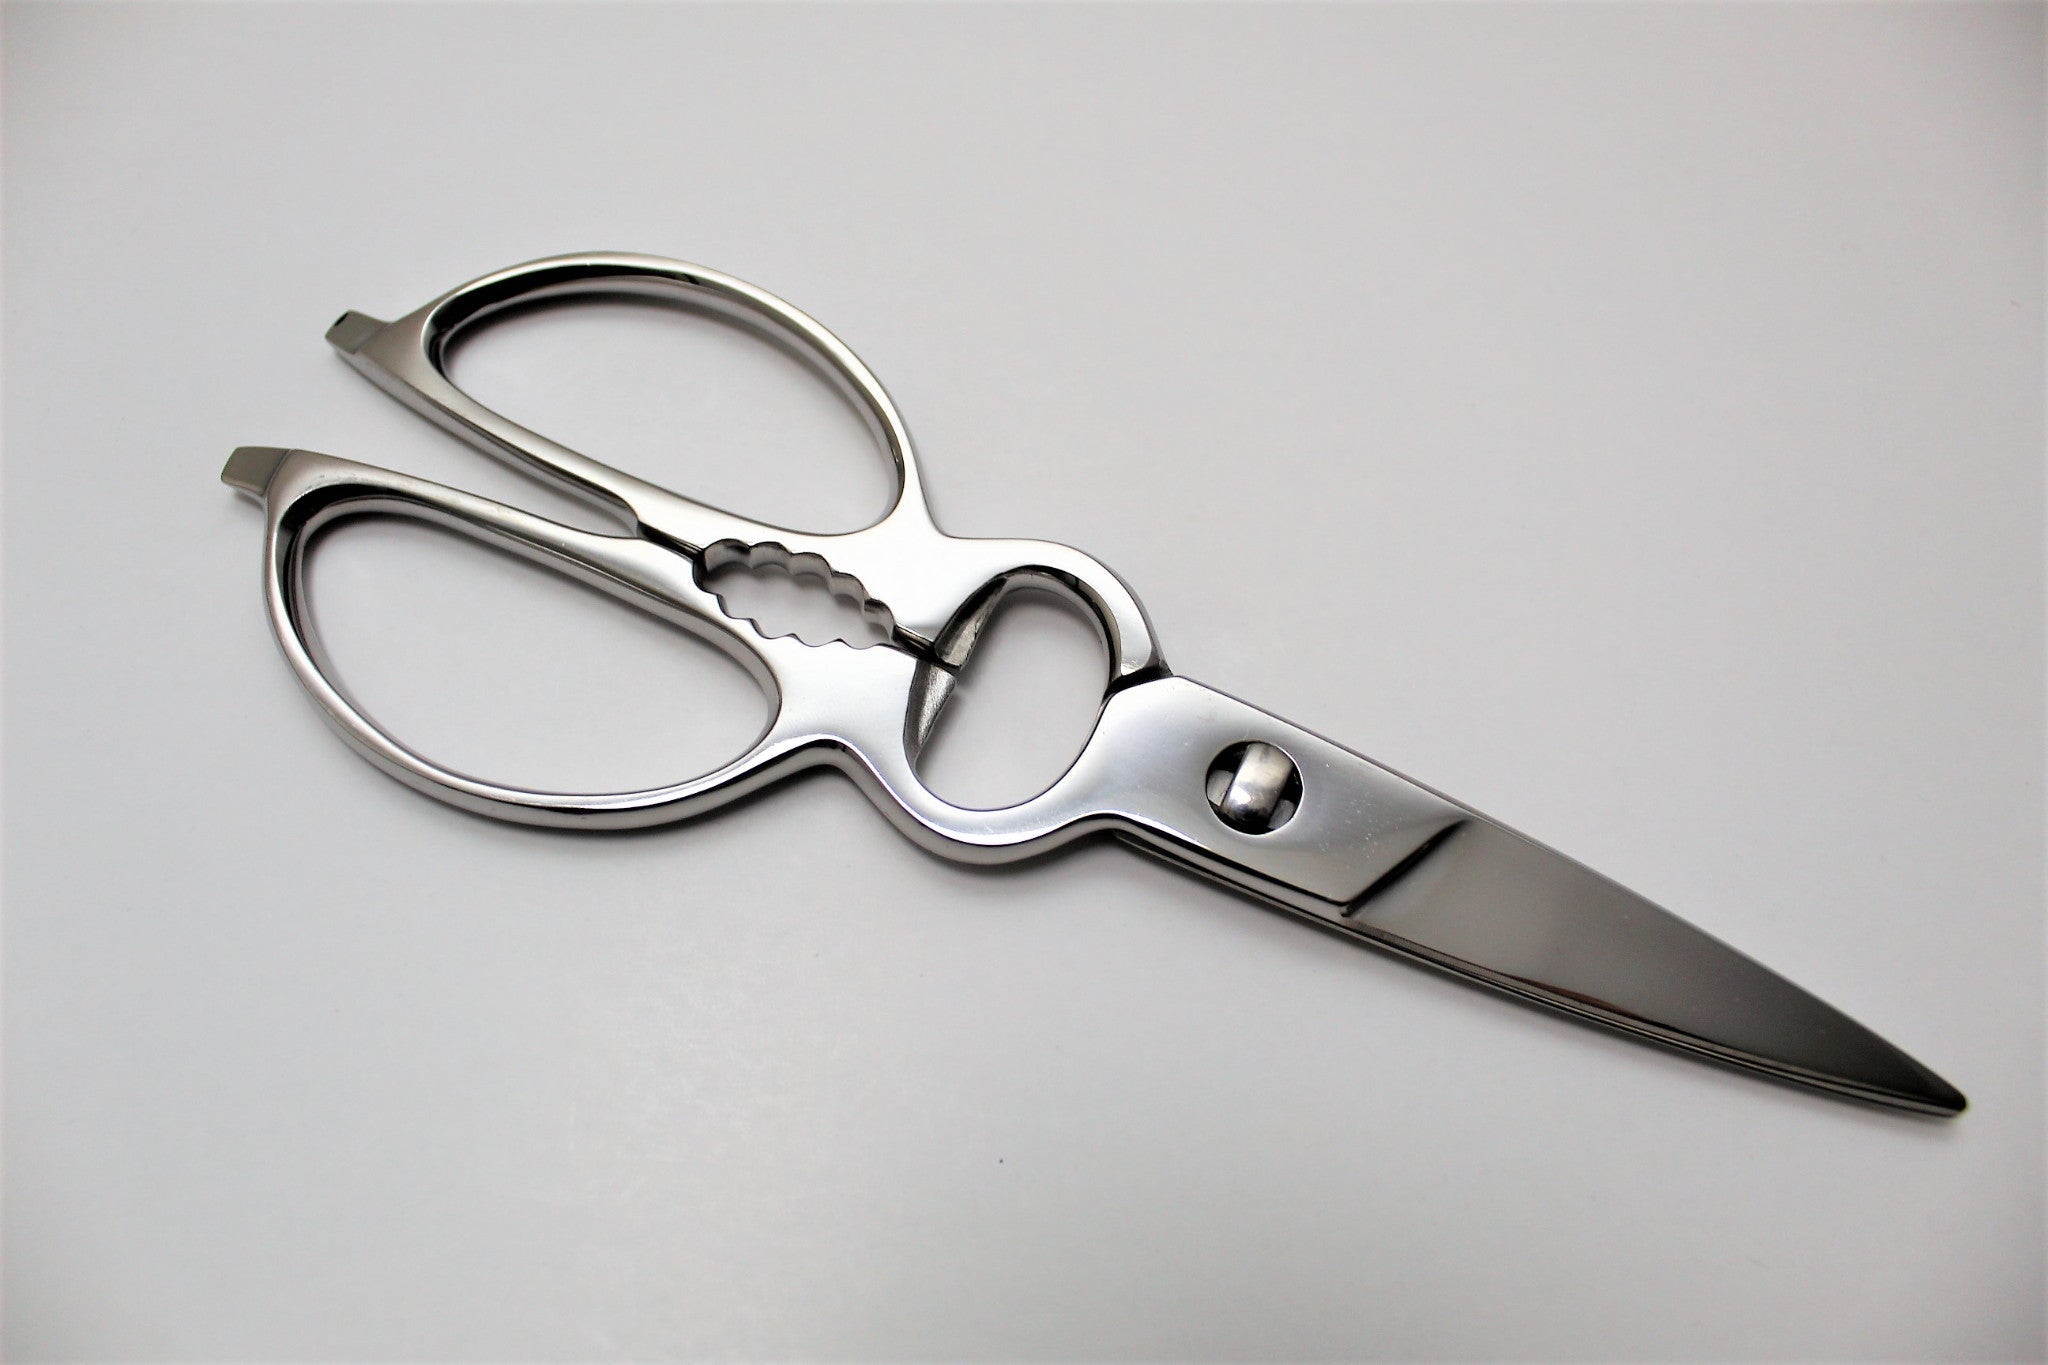 Japanese Stainless Steel Kitchen Scissors Detachable Gold